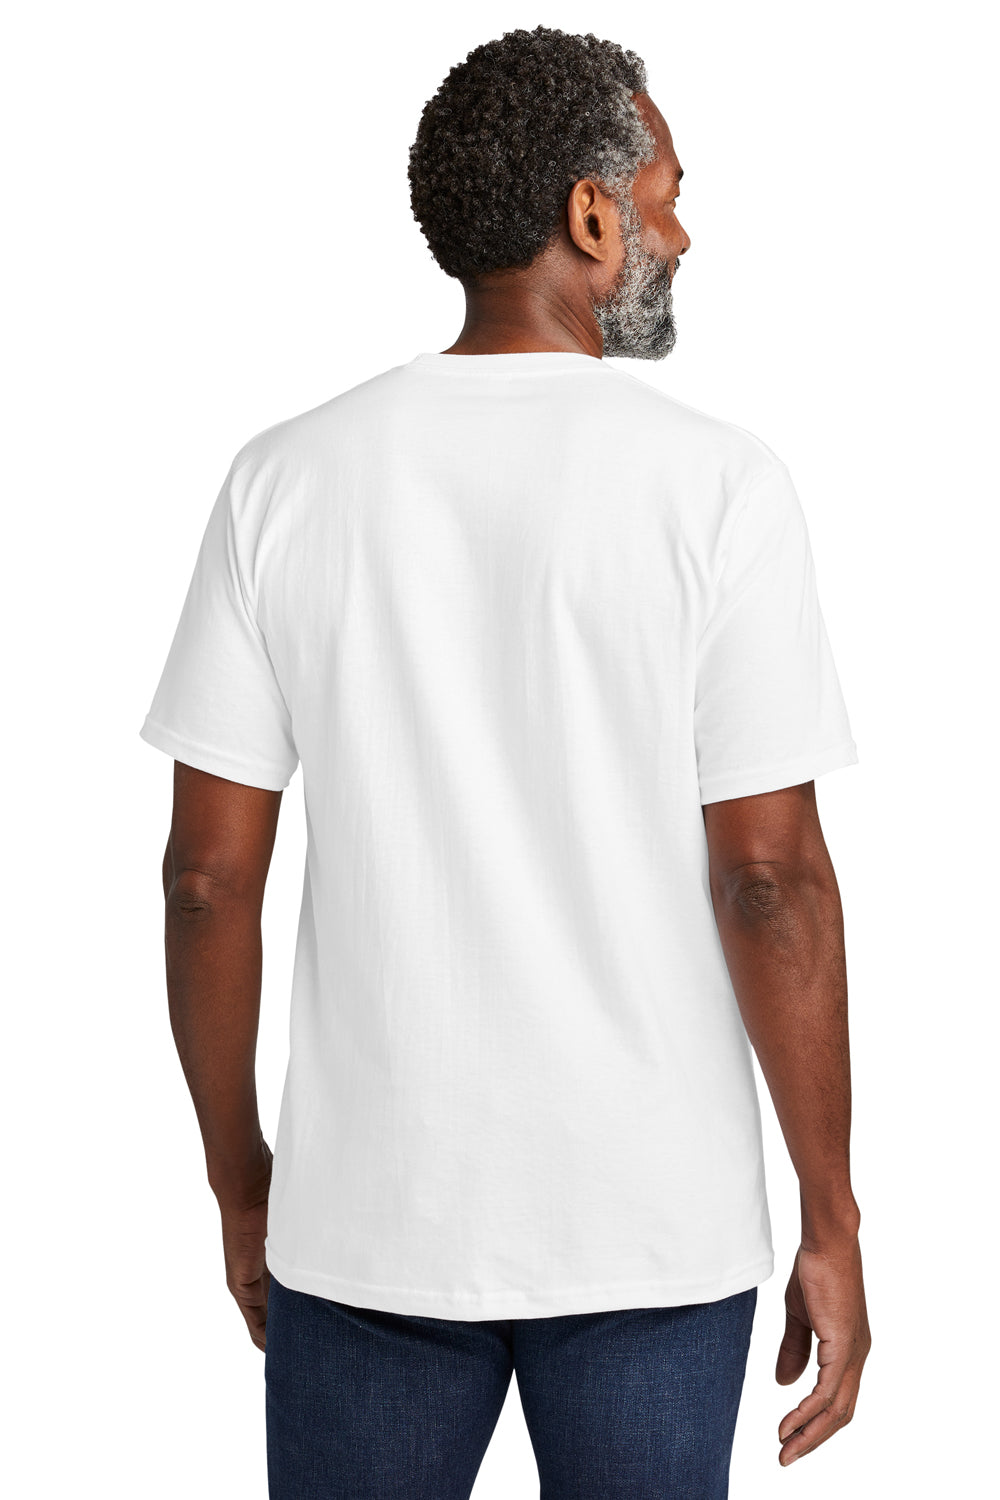 Volunteer Knitwear VL60 Chore Short Sleeve Crewneck T-Shirt White Back